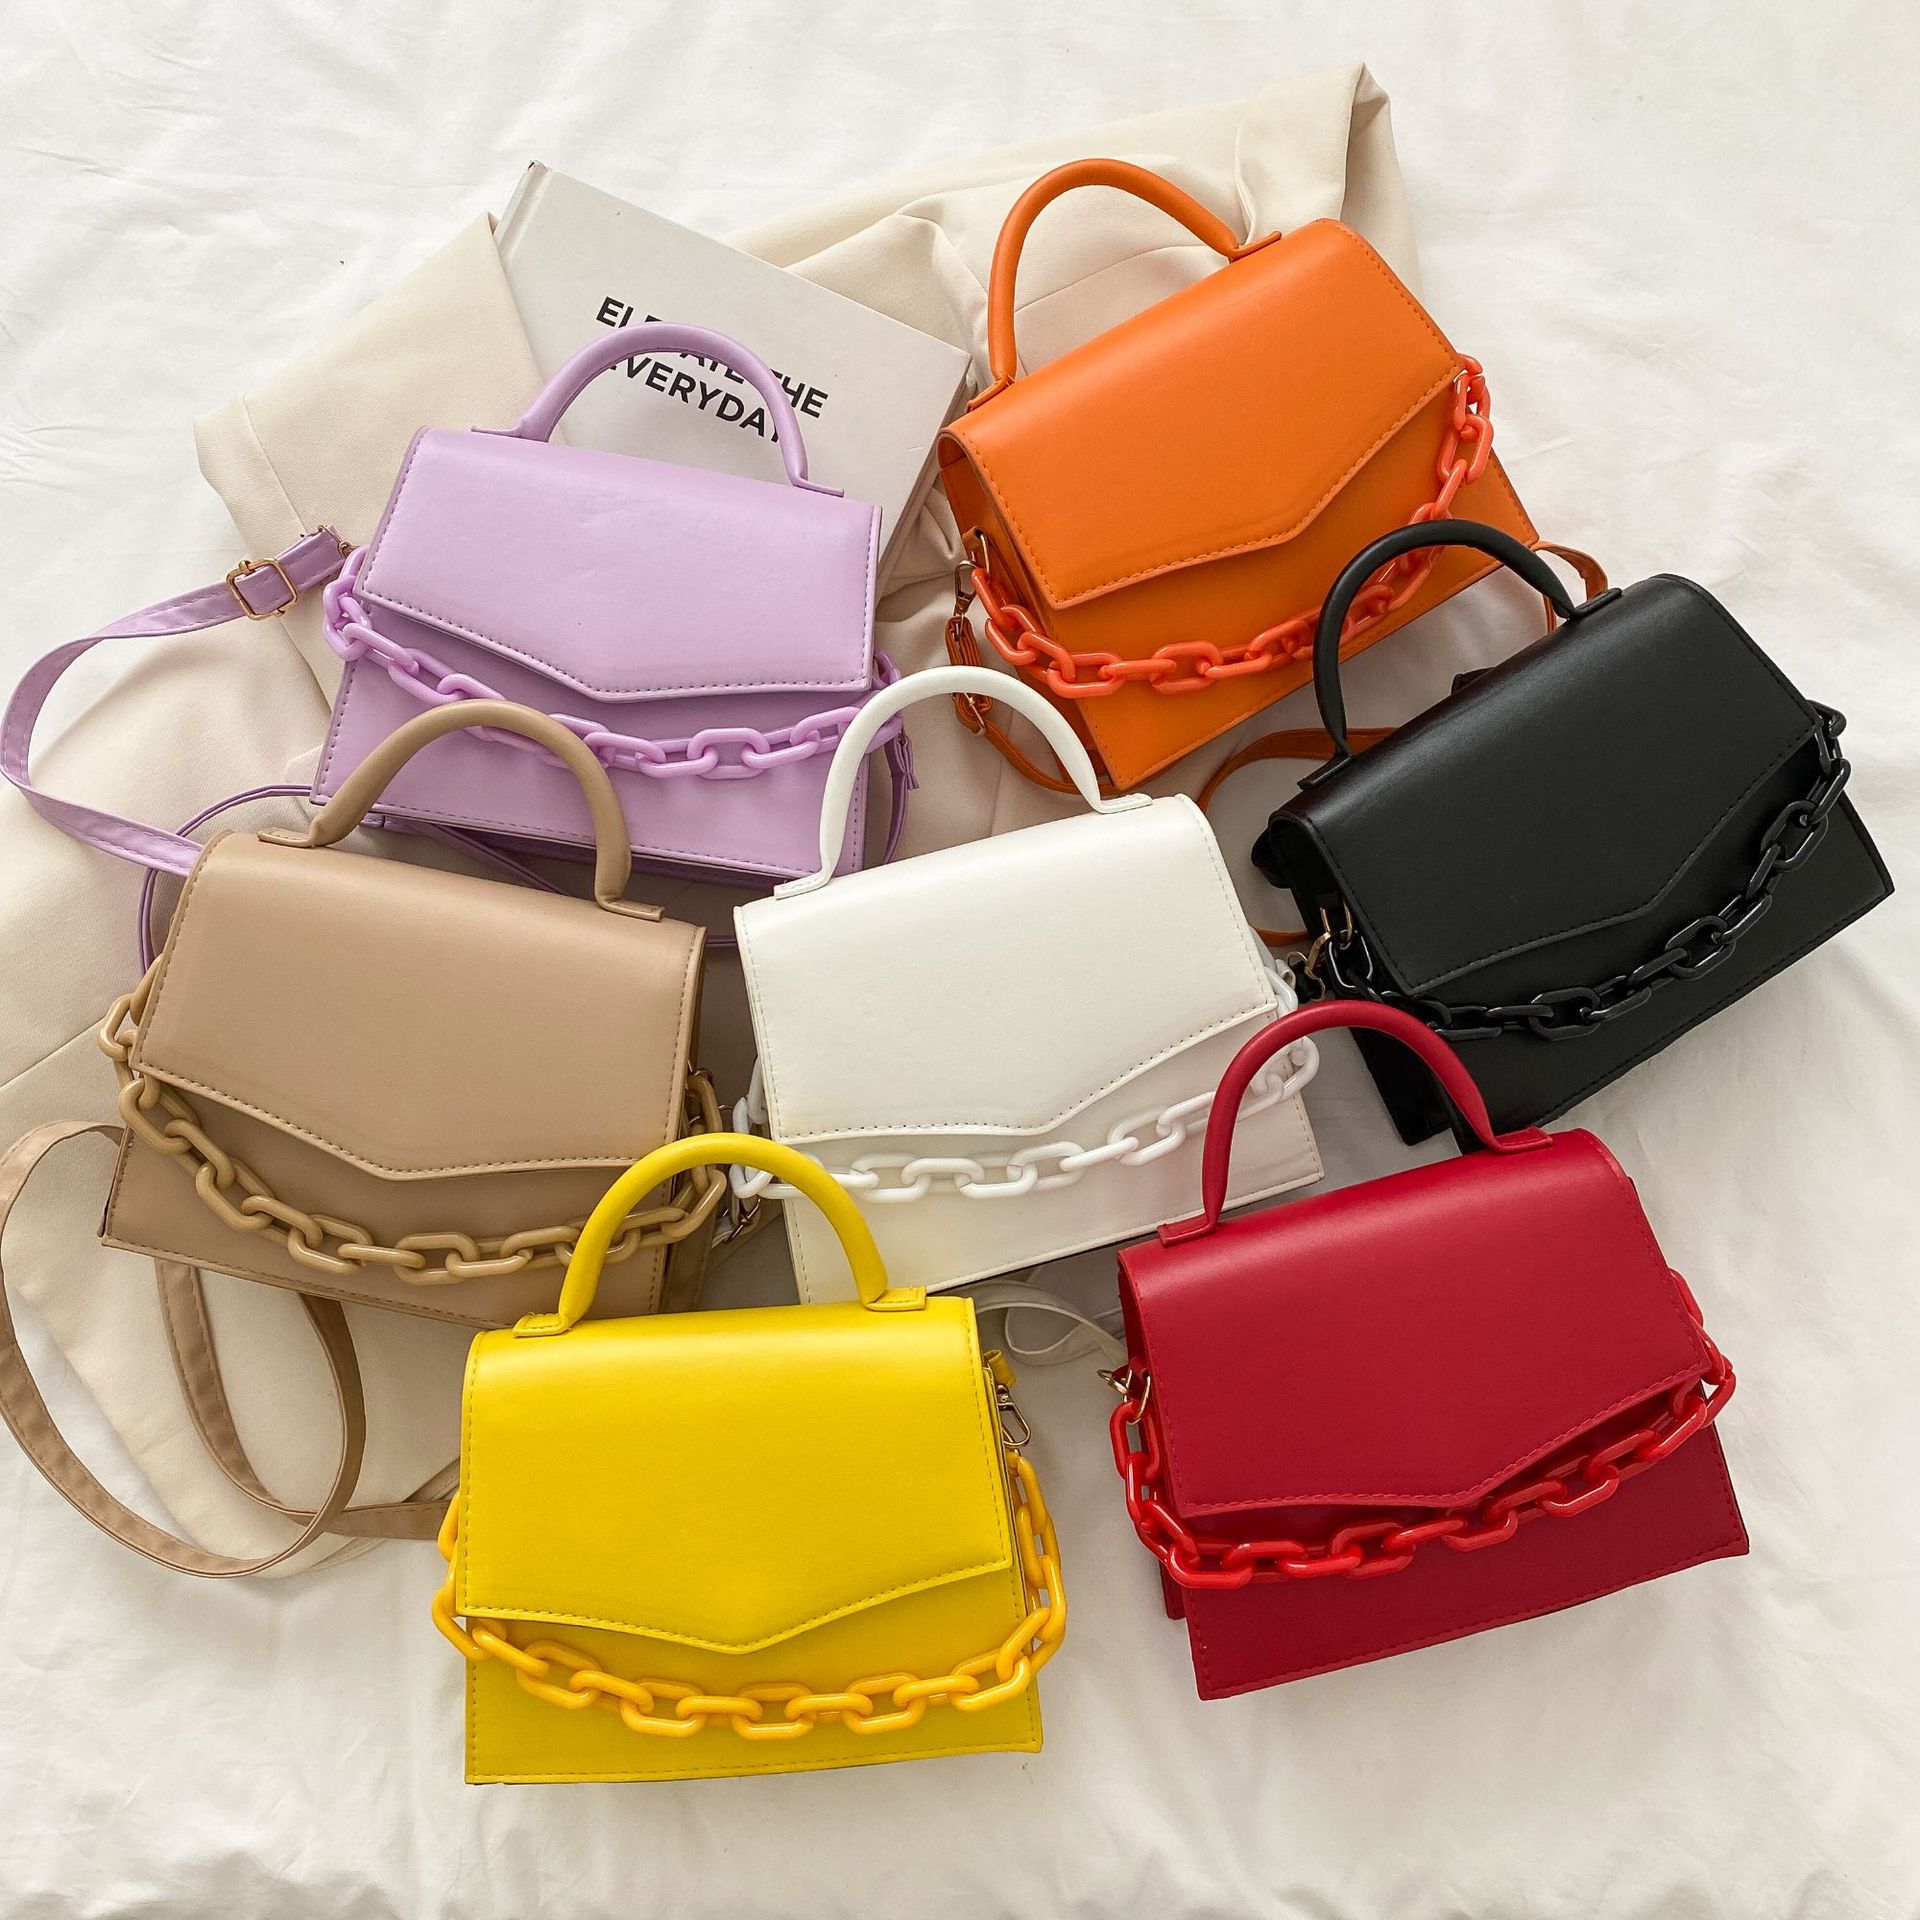 Ballchain bag New Simple Small Bag Women's New Trendy Fashion Candy Handbag Shoulder Messenger Bag